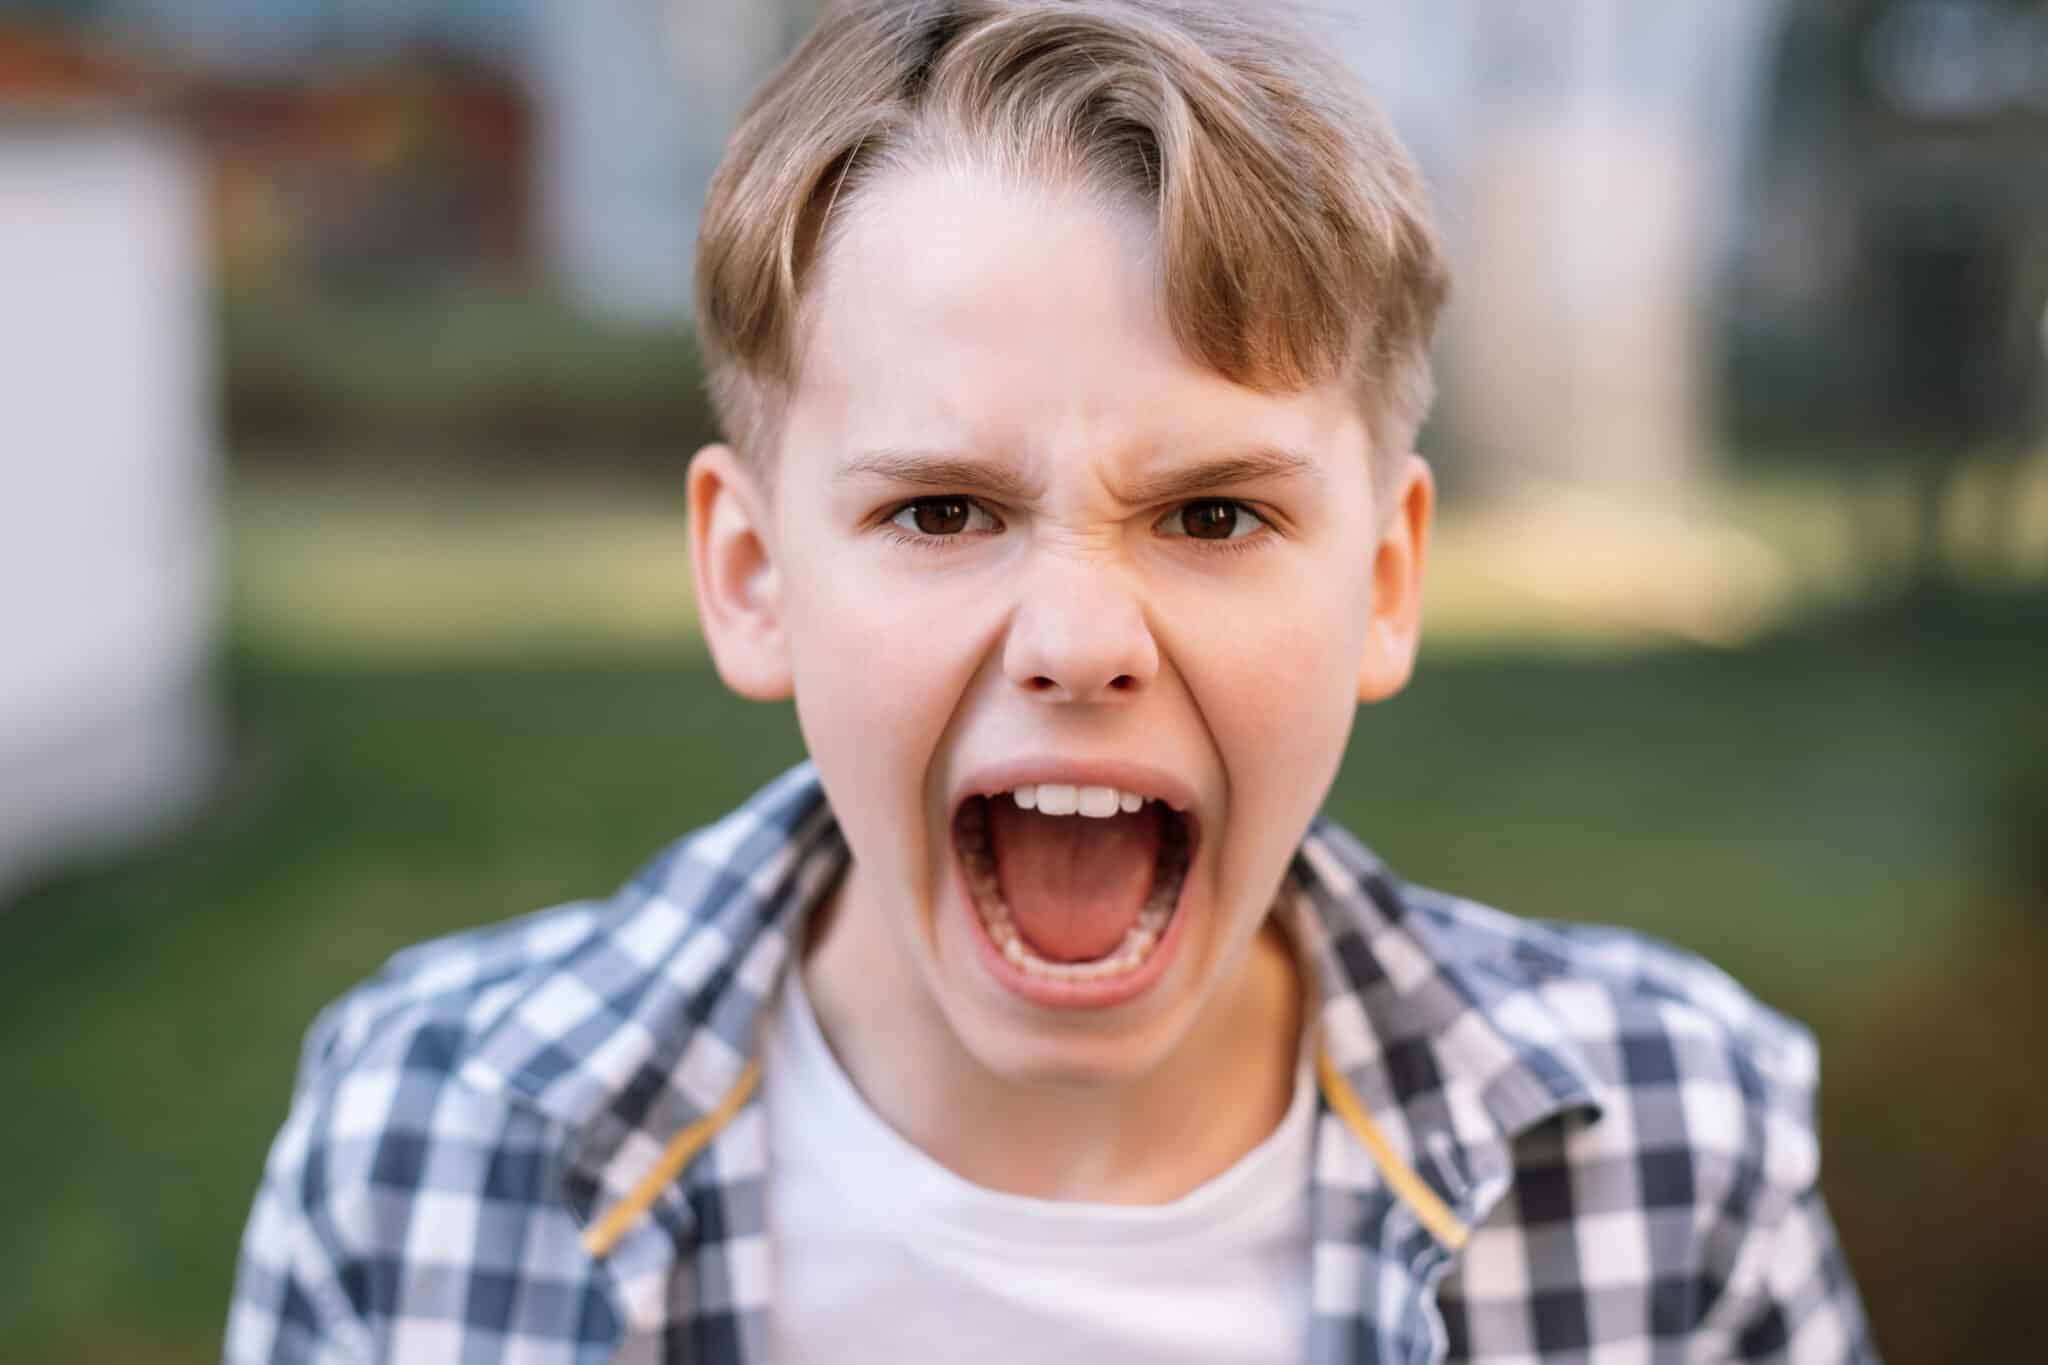 علت عصبانیت در کودکان